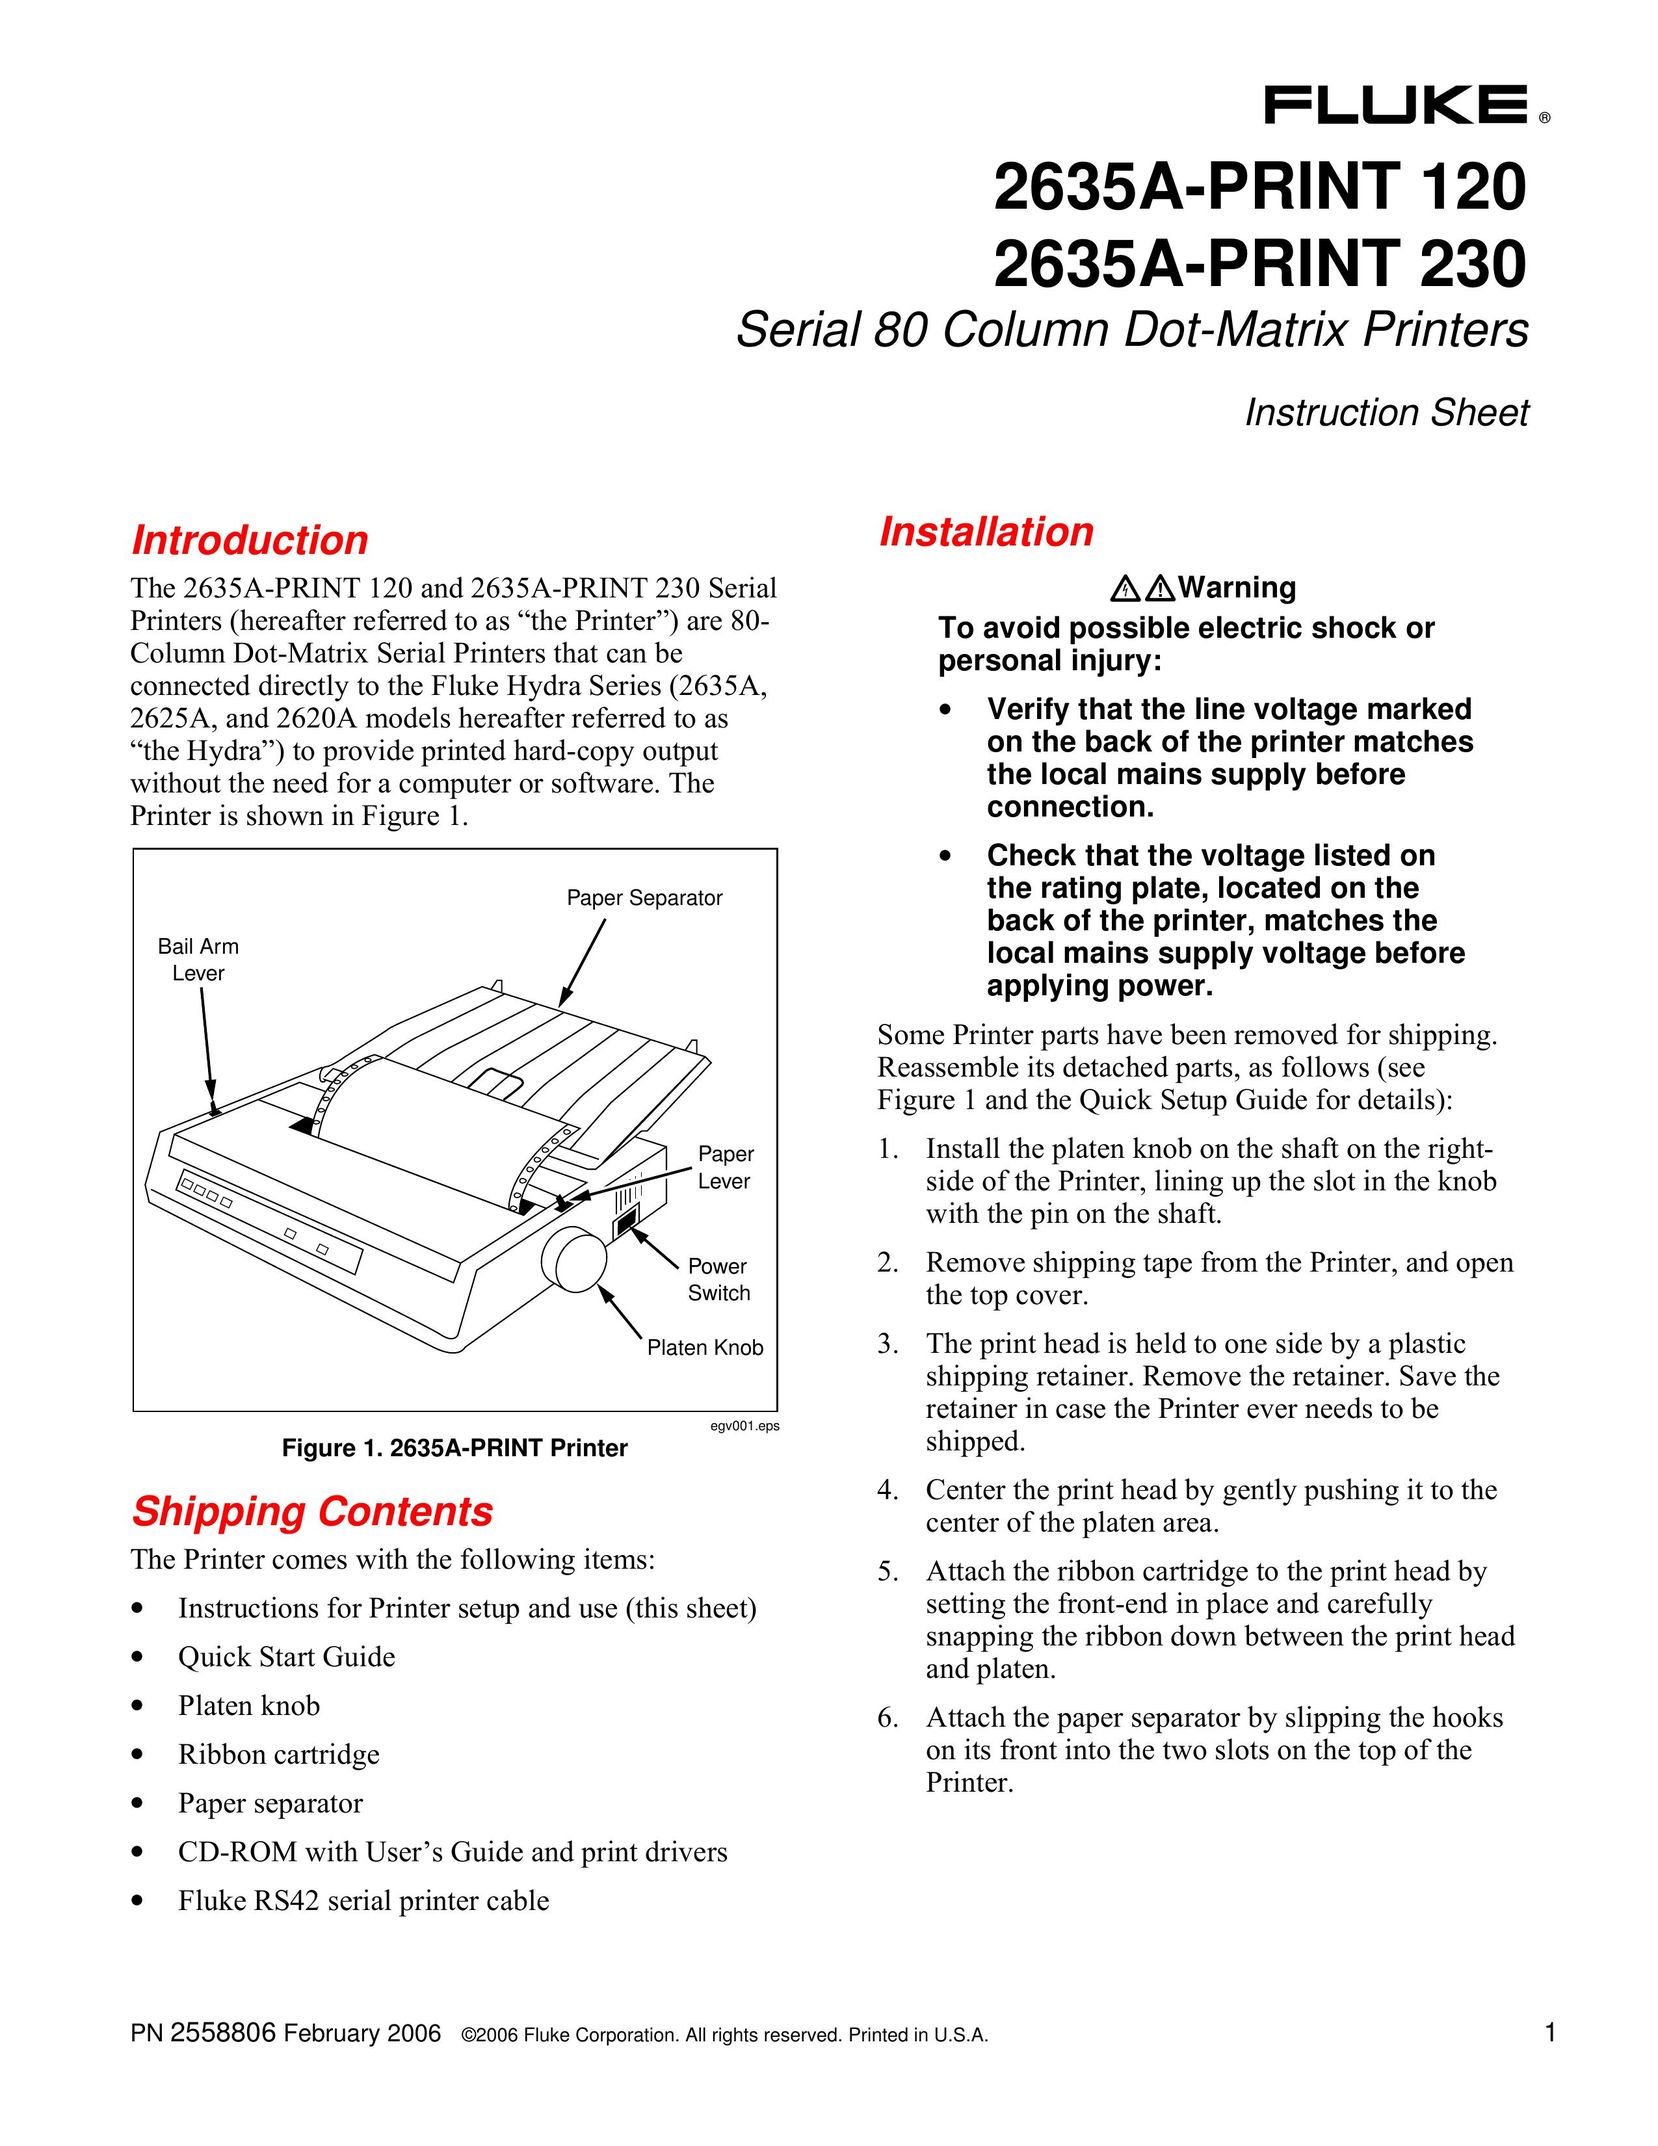 Fluke 2635A-PRINT 120 Printer User Manual